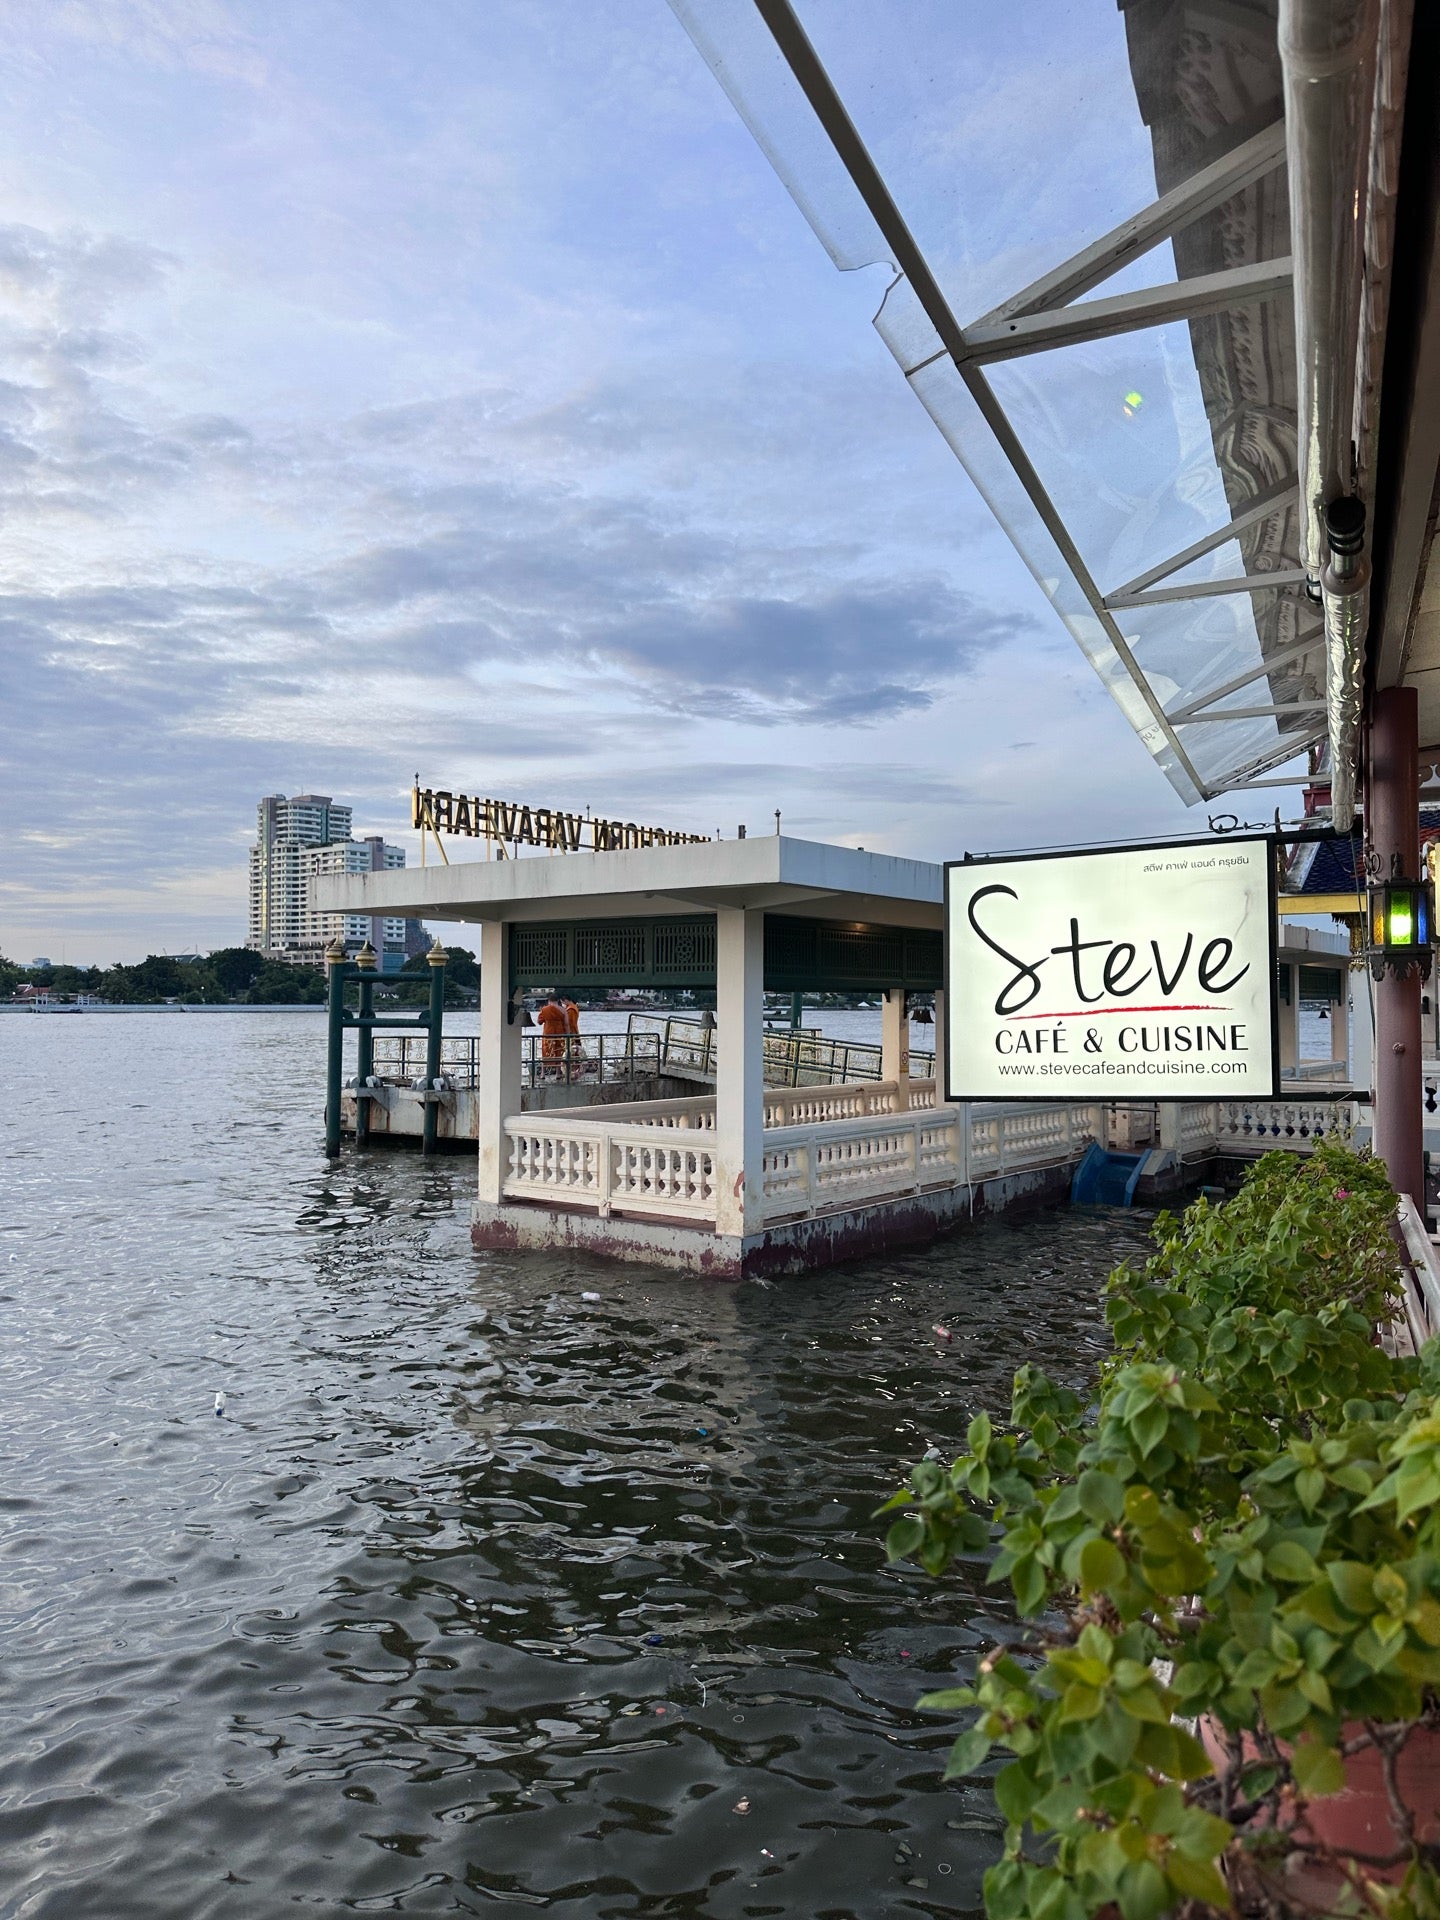 Steve Café & Cuisine (สตีฟ คาเฟ่ แอนด์ คุยซีน)